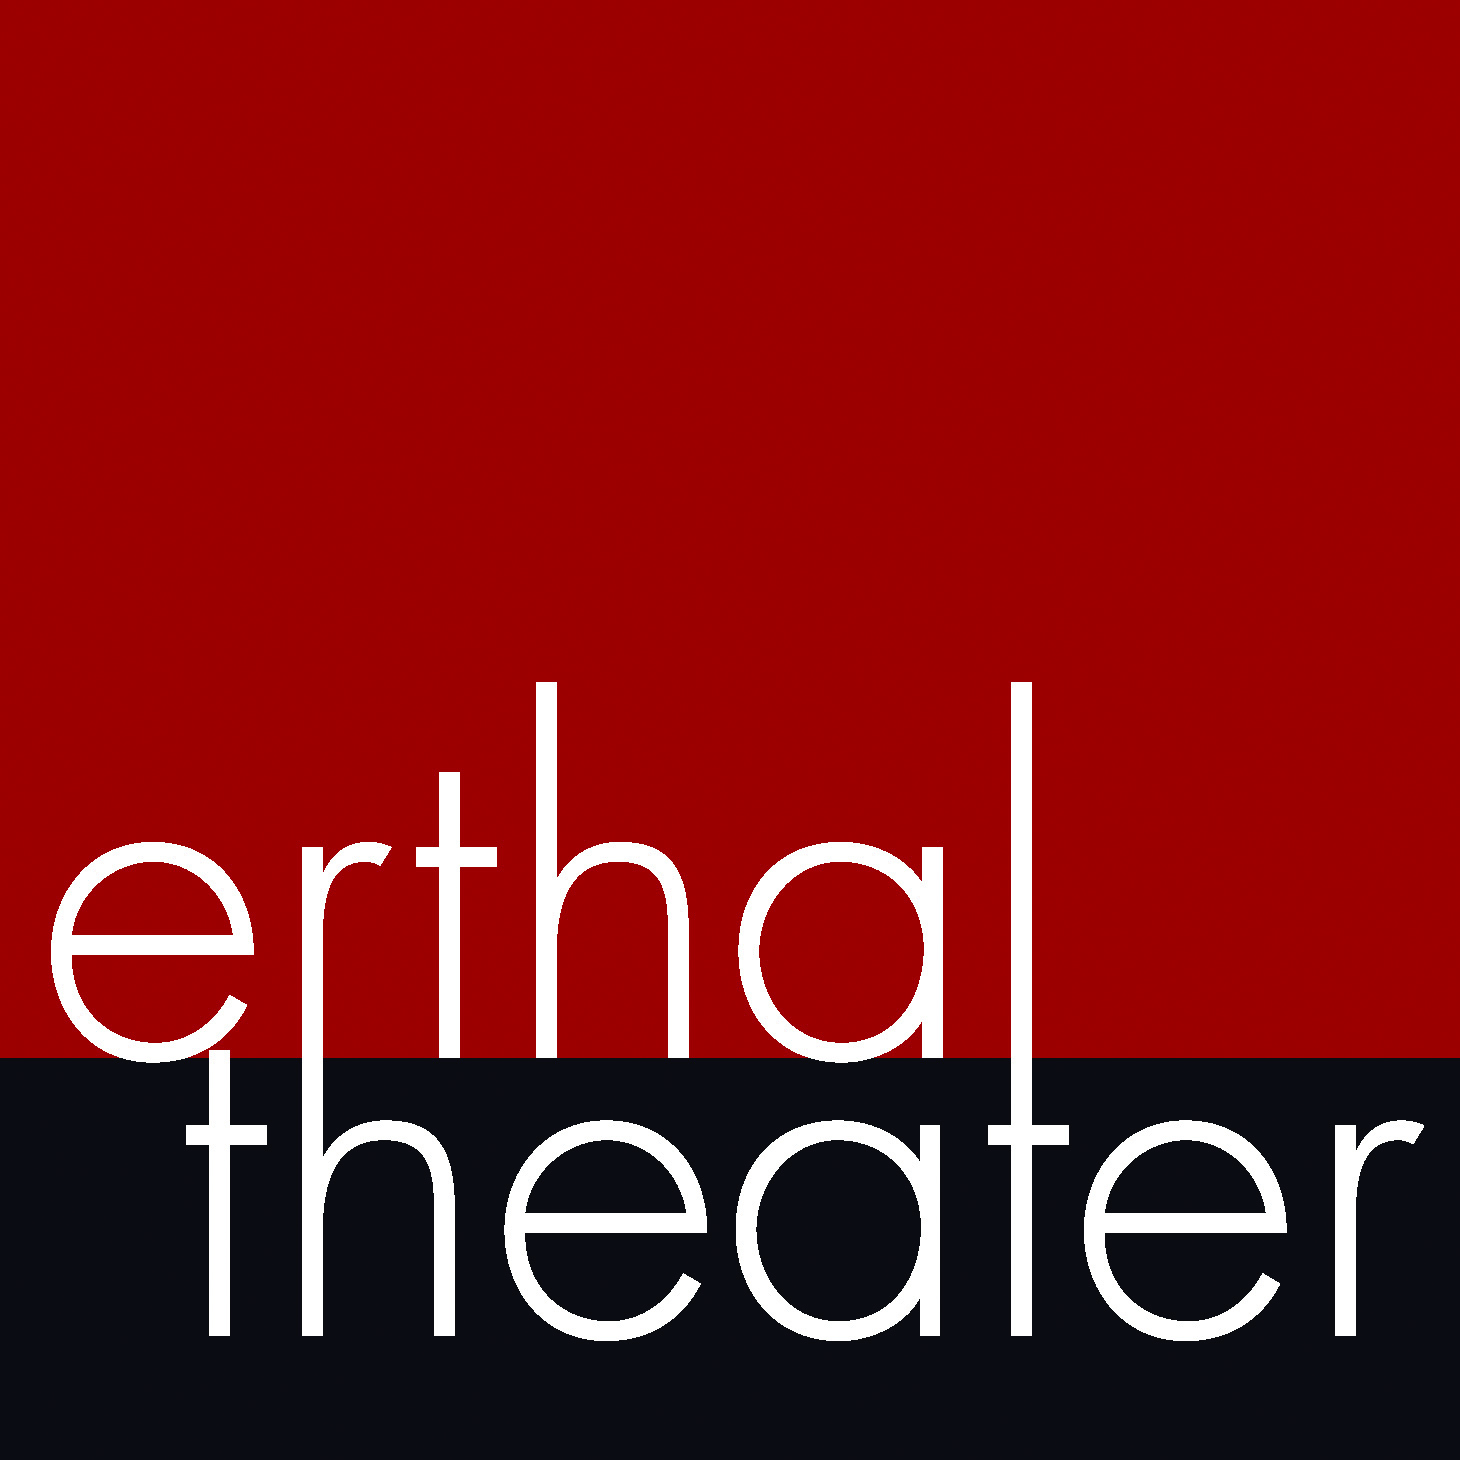 Erthaltheater